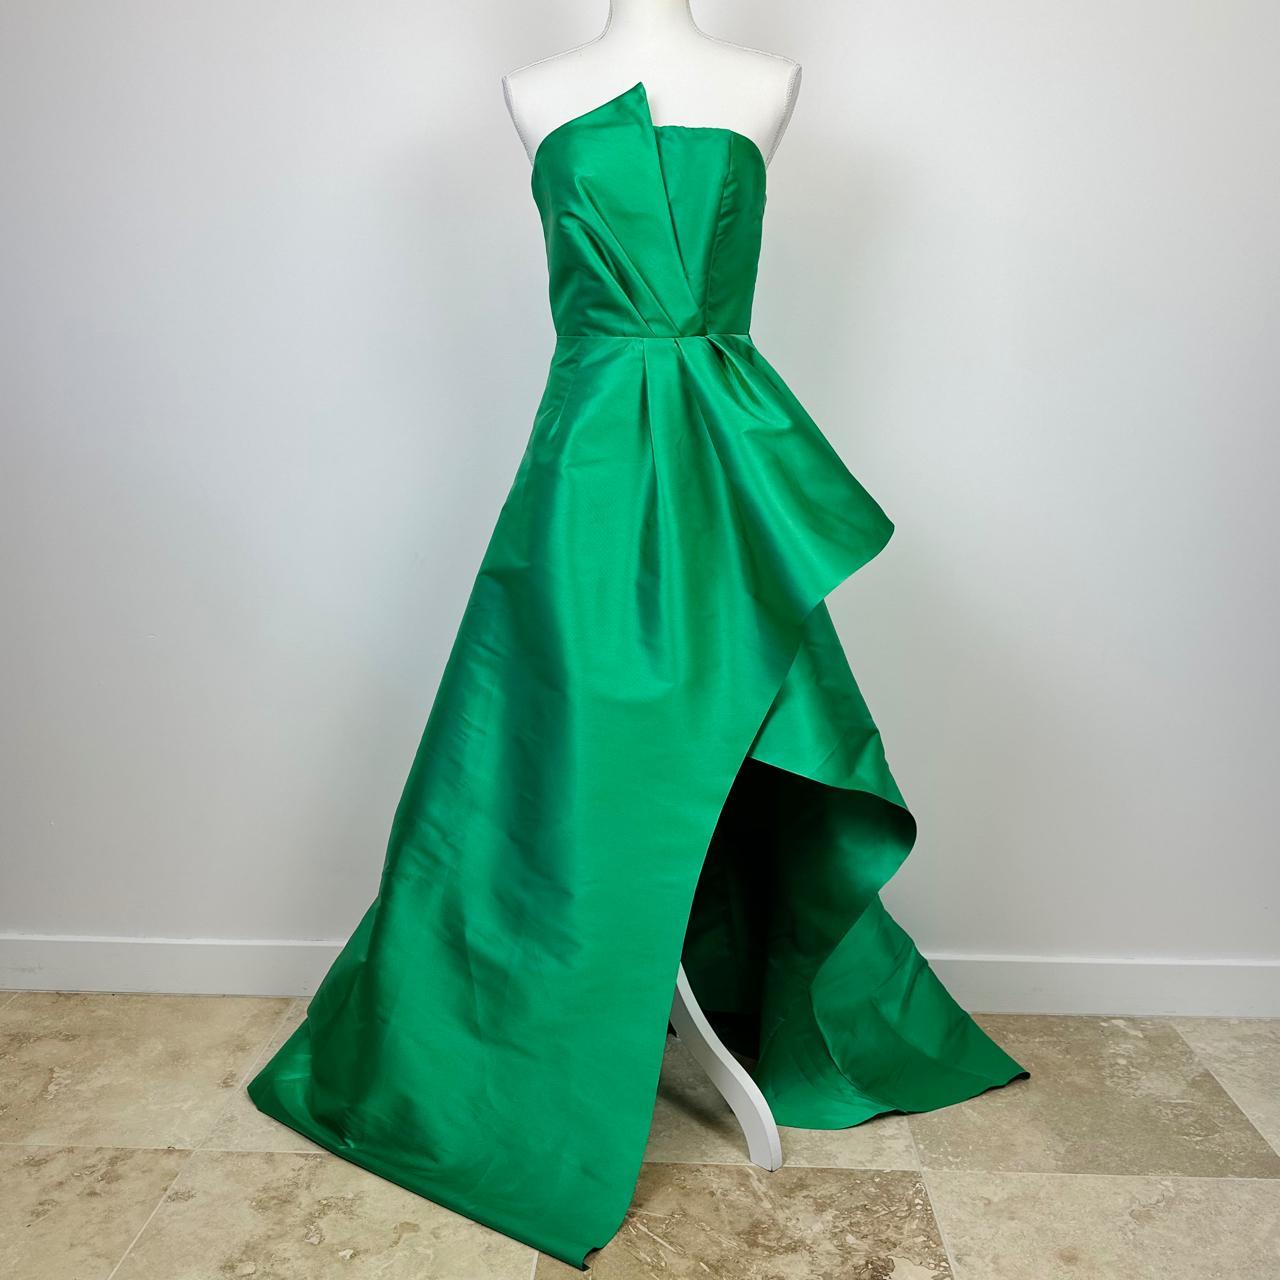 ELLIATT Protea Gown Maxi Dress Strapless Green... - Depop